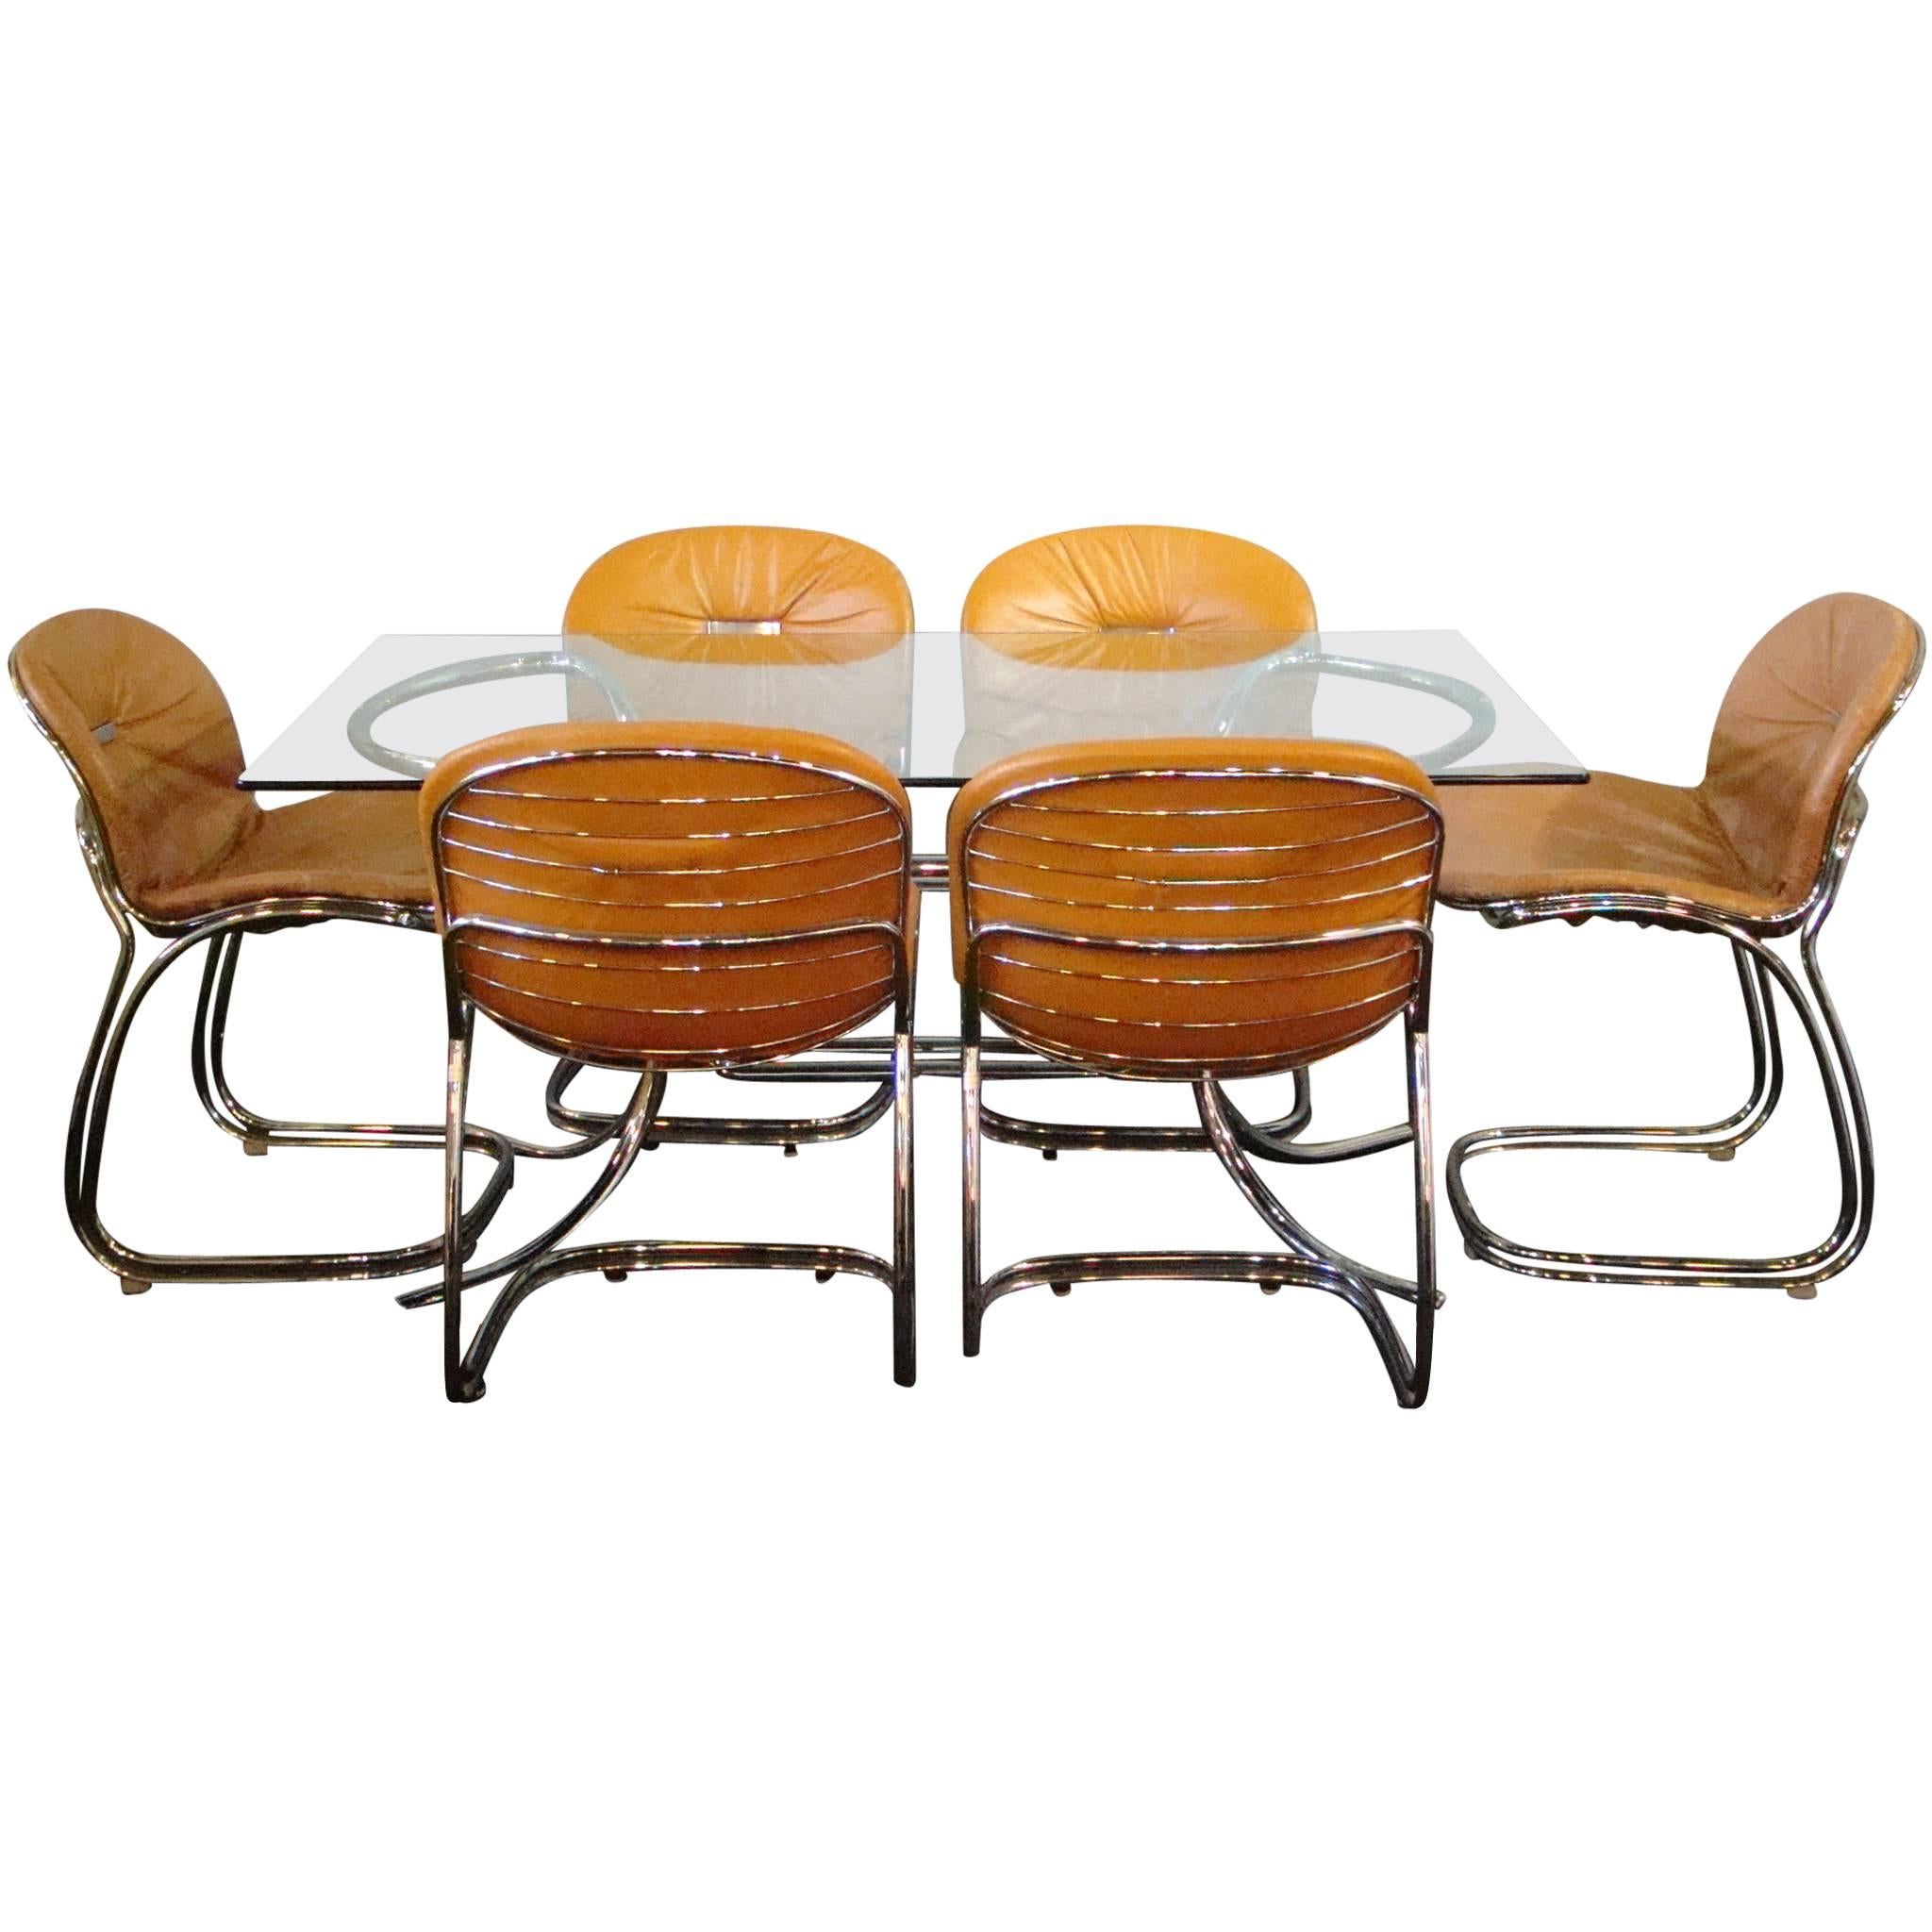 1970s Set of Six Dining Chairs by Italian Designer Gastone Rinaldi for RIMA